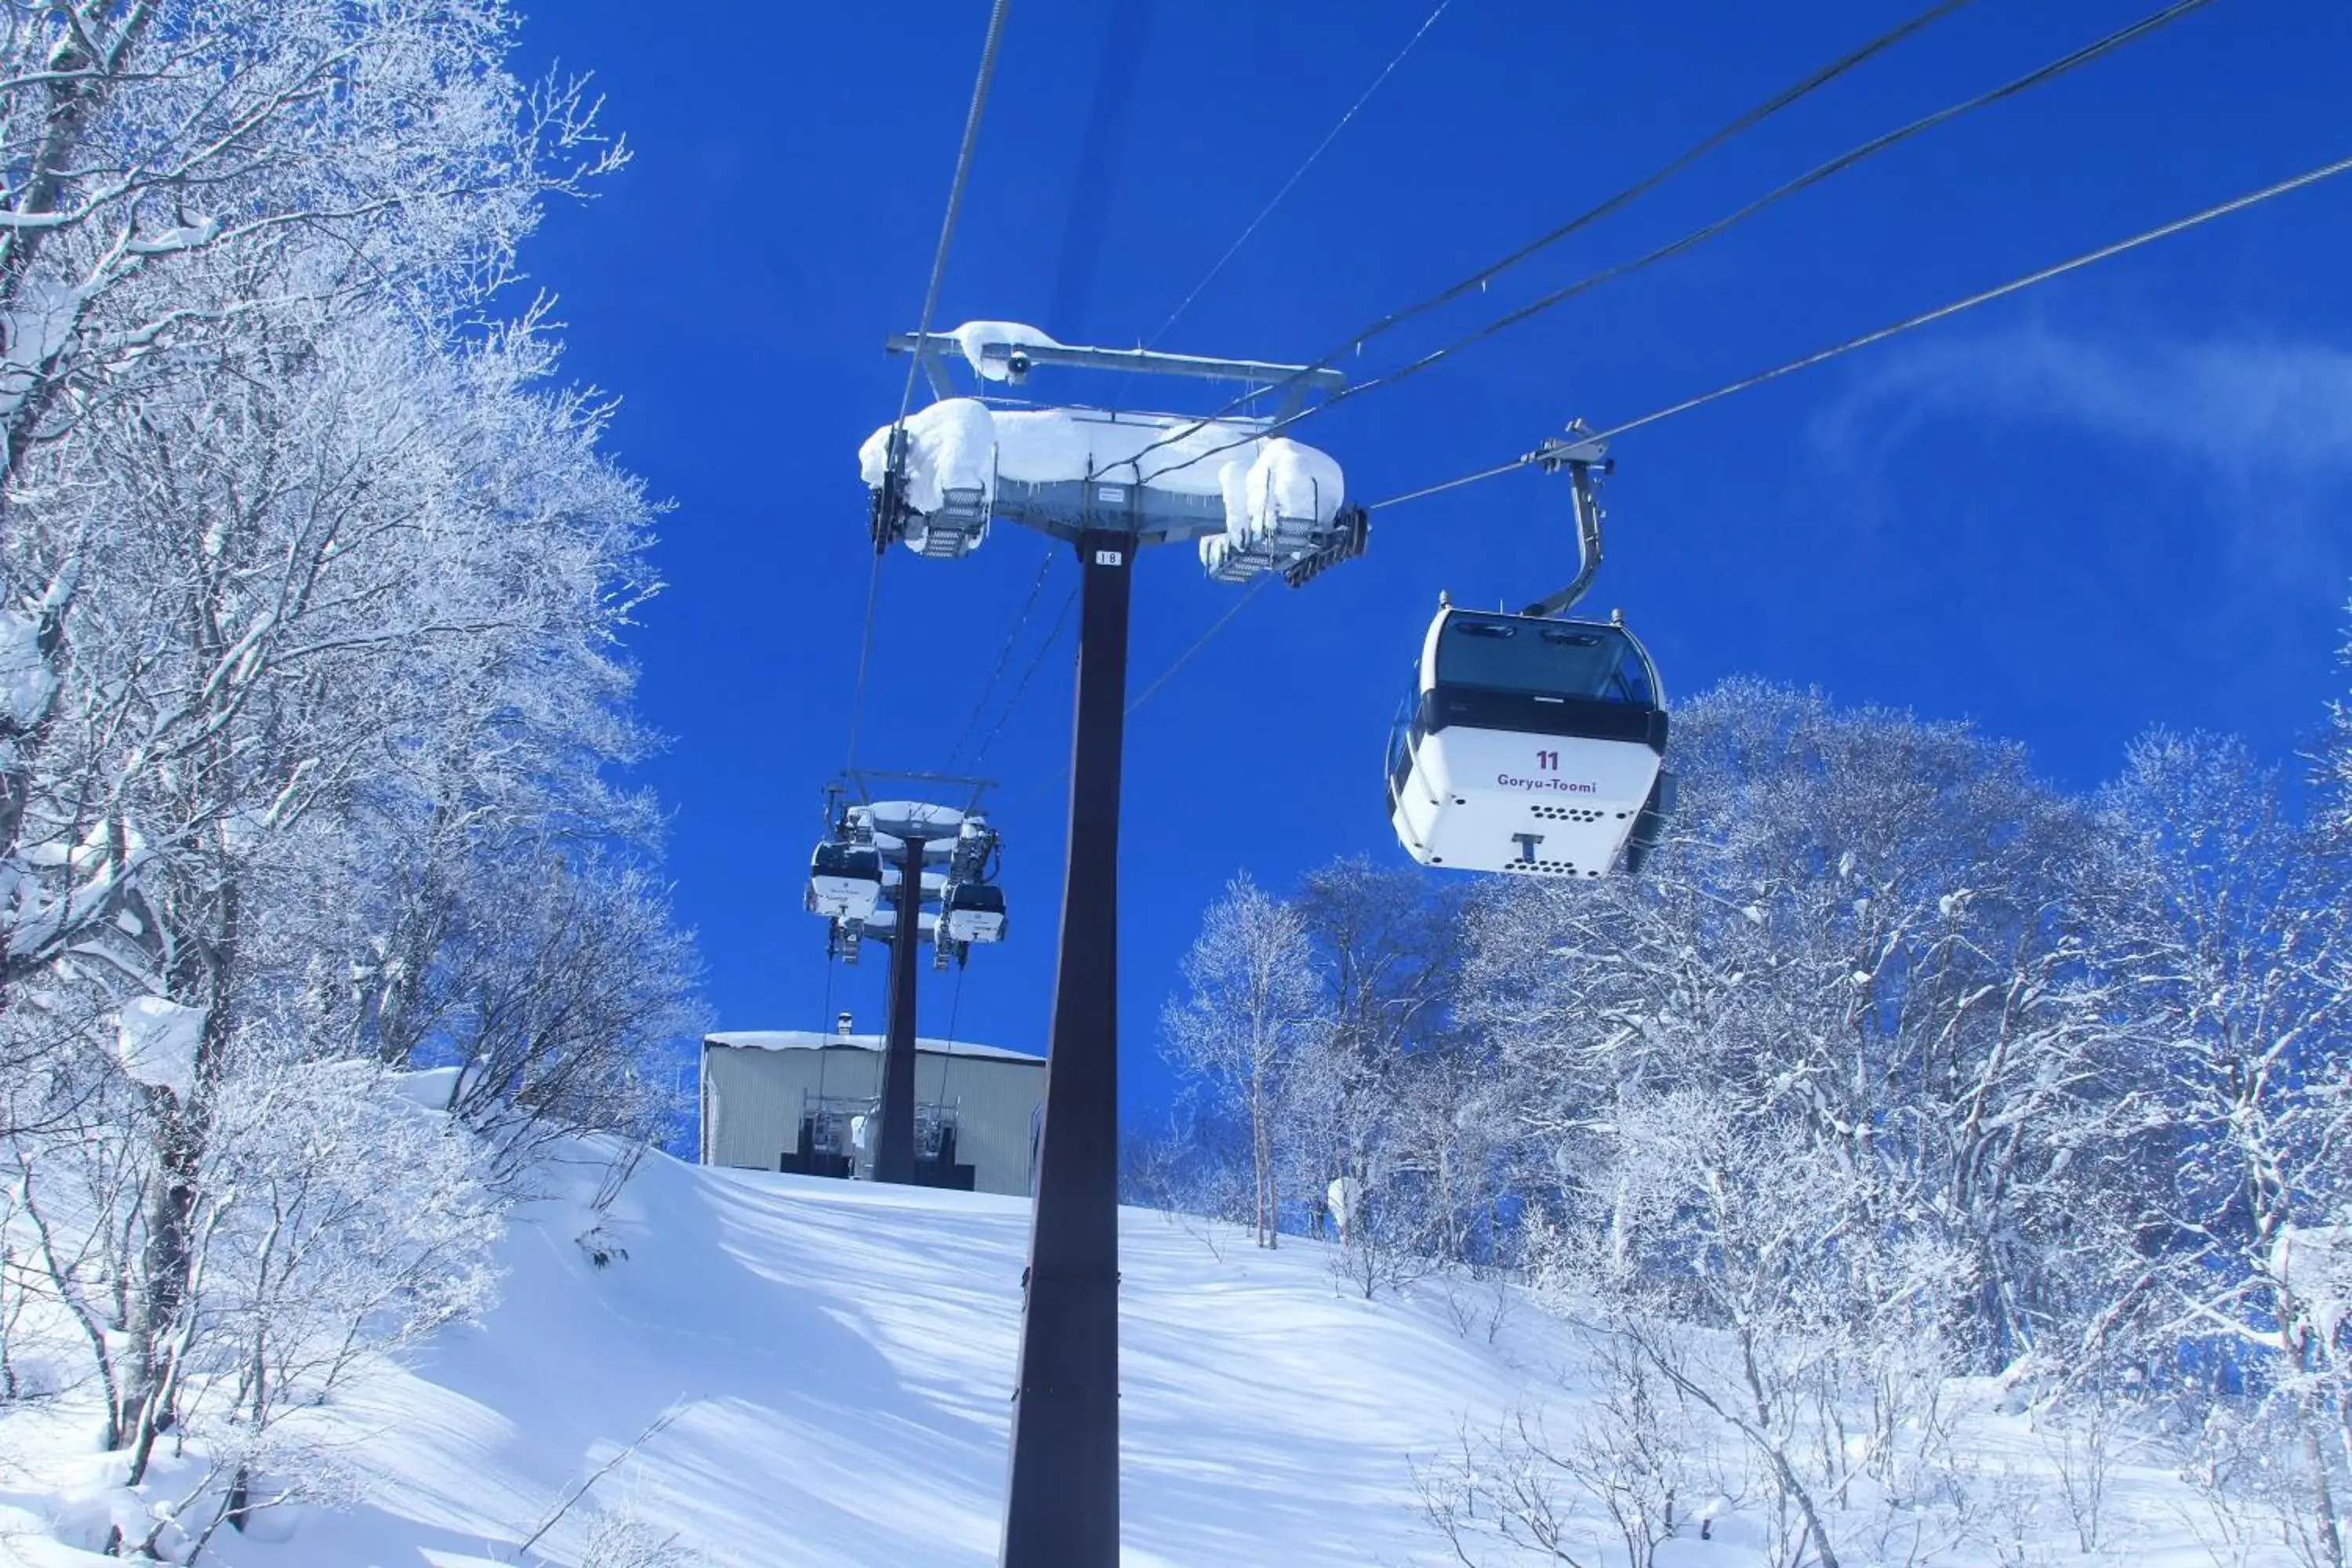 Skiing, Winter in Hotel Hakuba